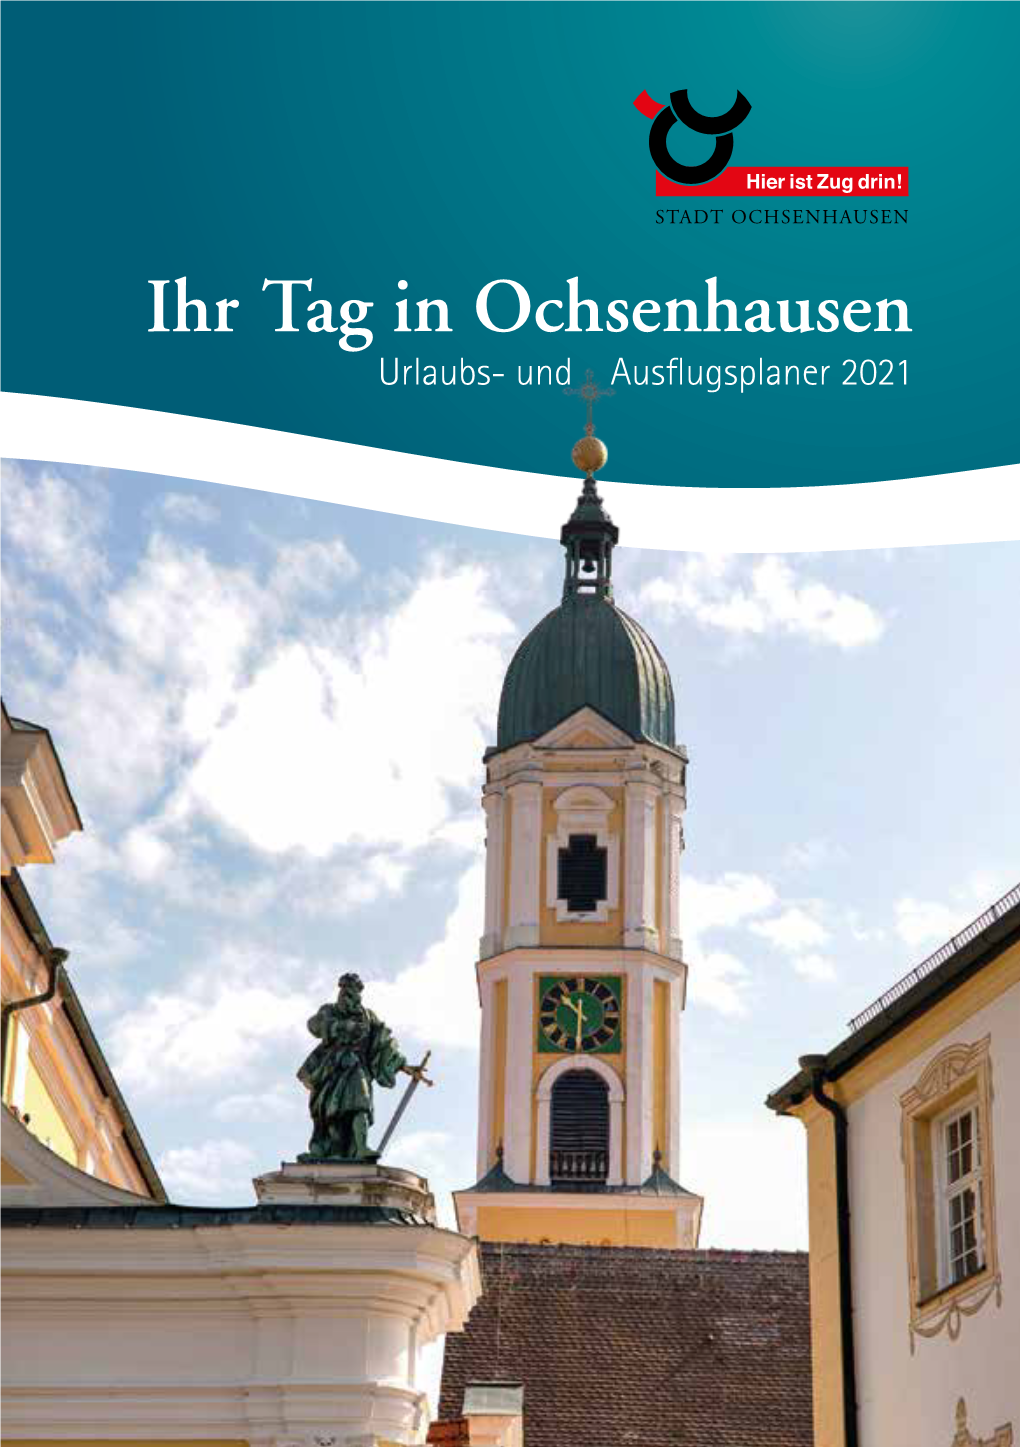 Ausflugsplaner 2021 Ochsenhausen